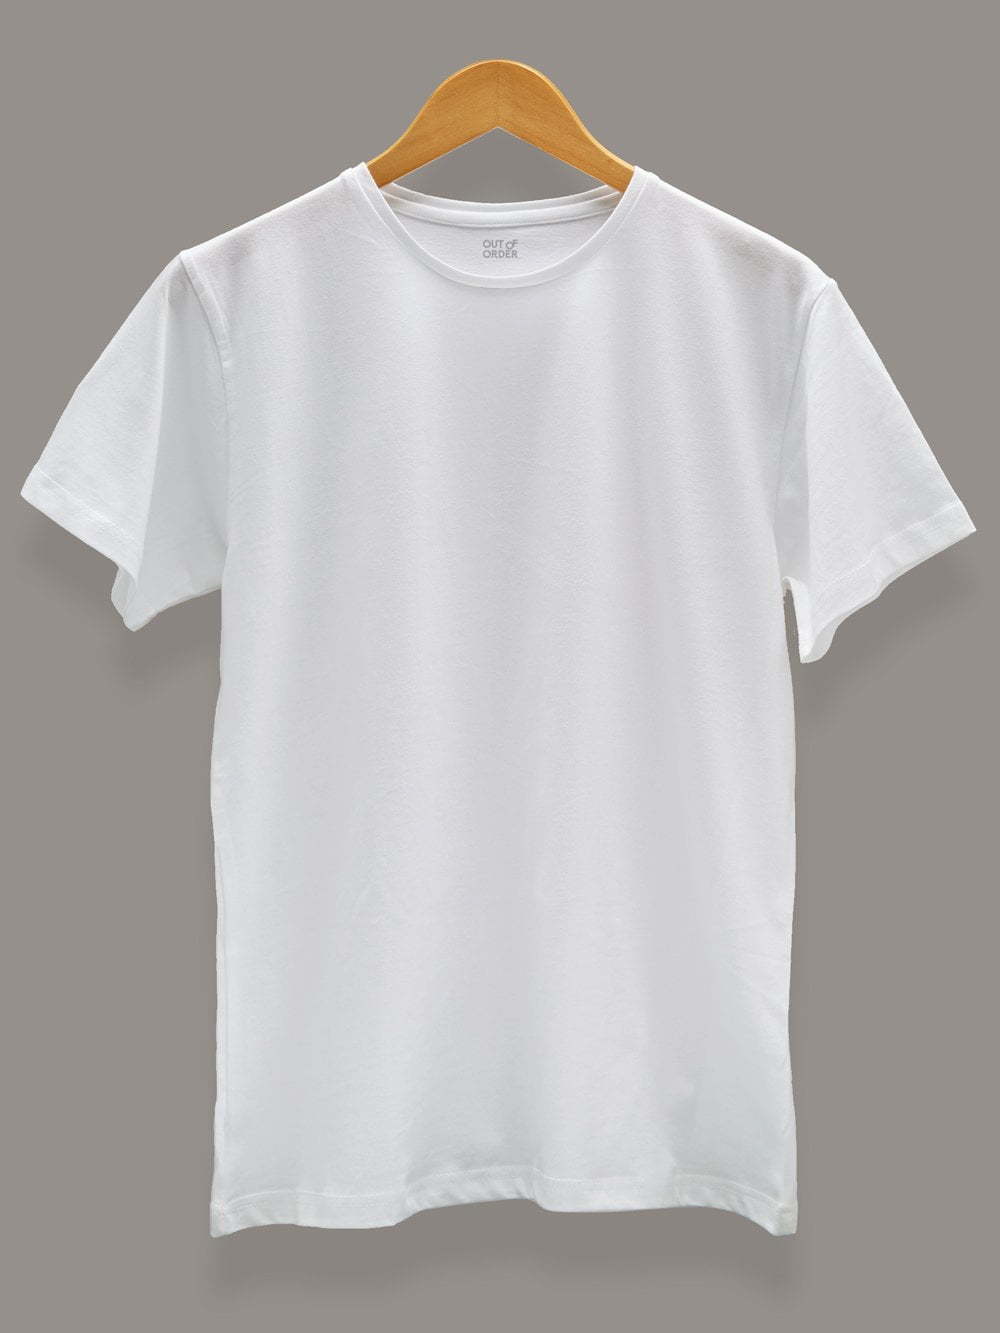 1 Buy Finest Men S White T Shirt By Brand Outoforder In